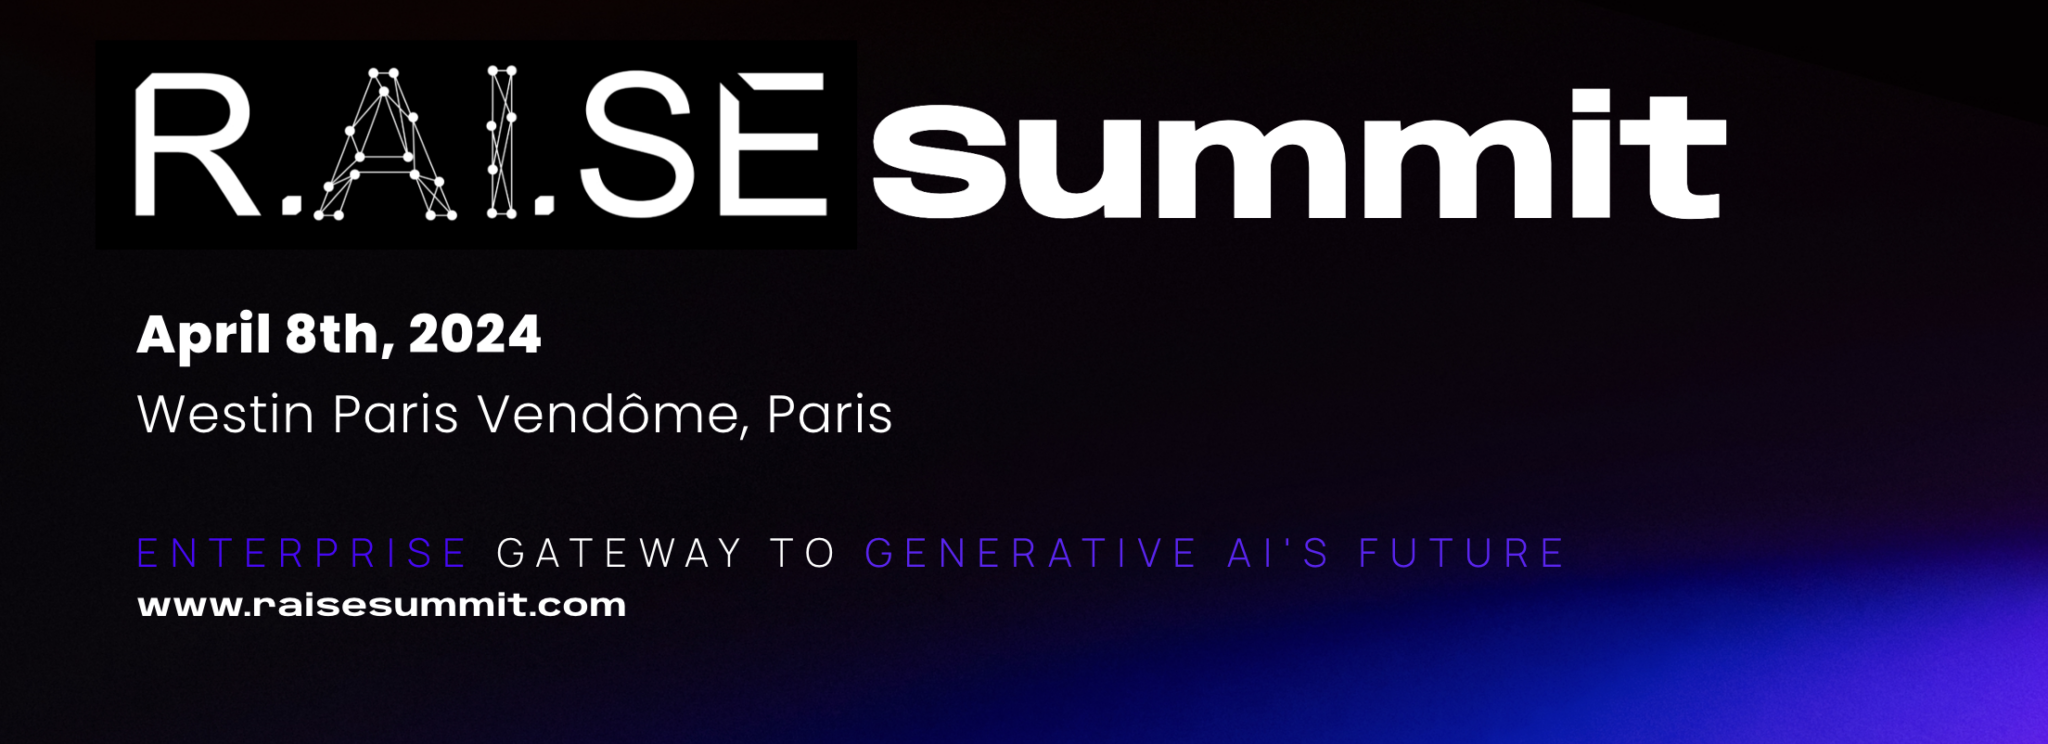 Pressemelding fra R.AI.SE Summit 8. april 2024, Westin Paris Vendôme - CryptoCurrencyWire